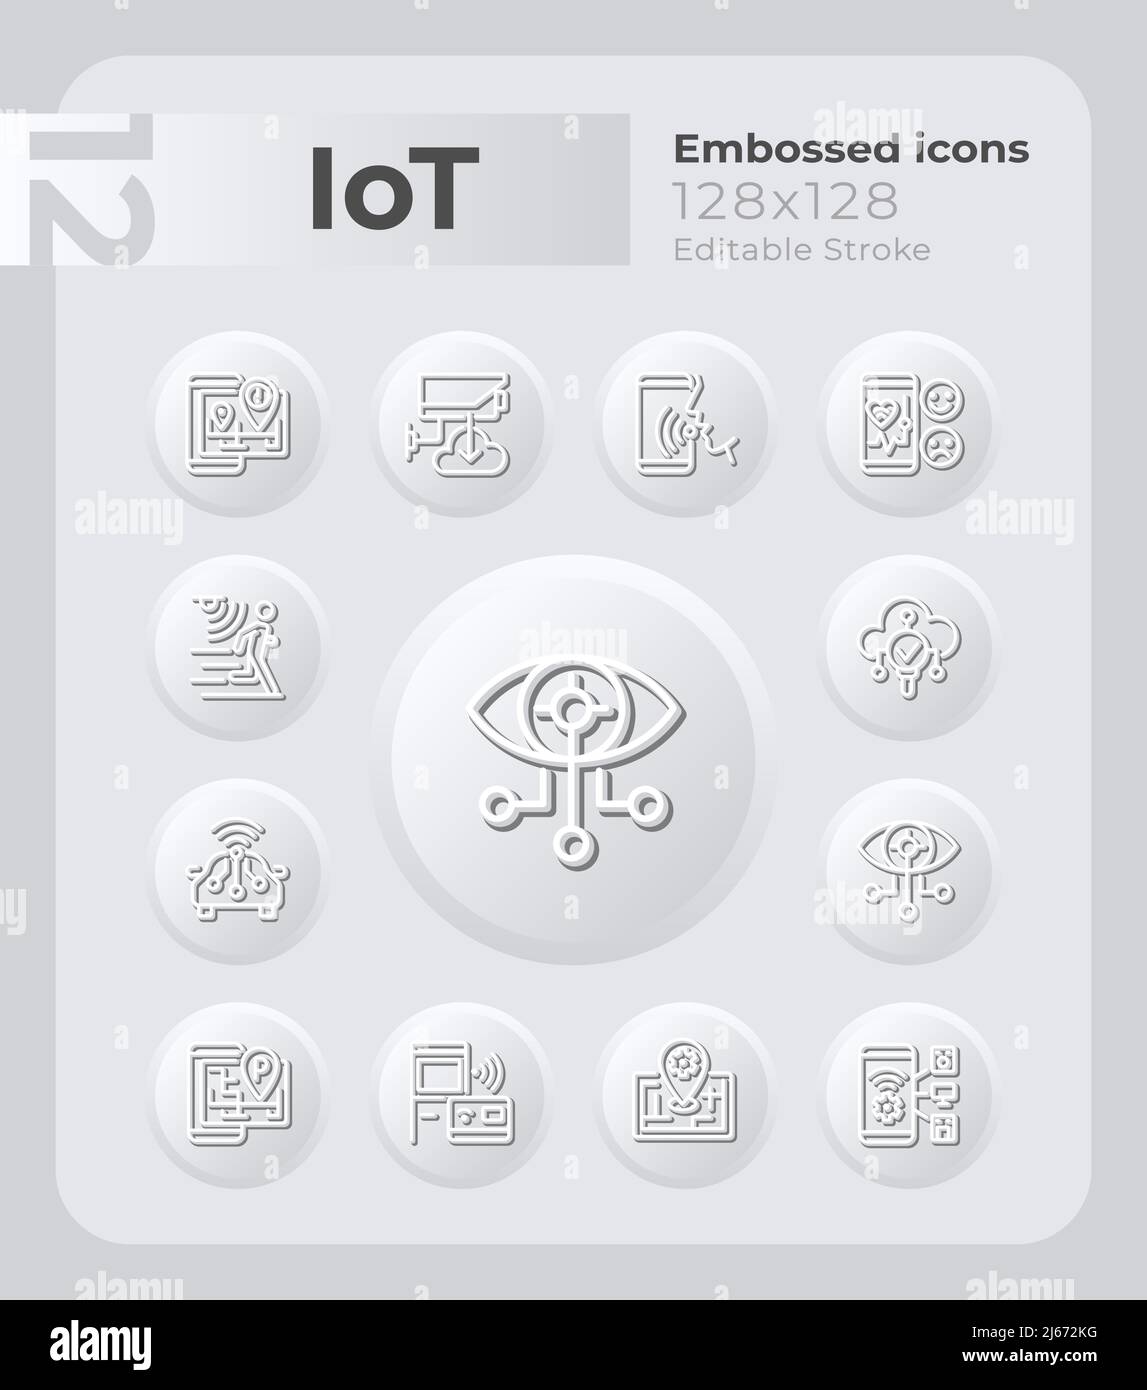 IoT embossed icons set Stock Vector Image & Art - Alamy